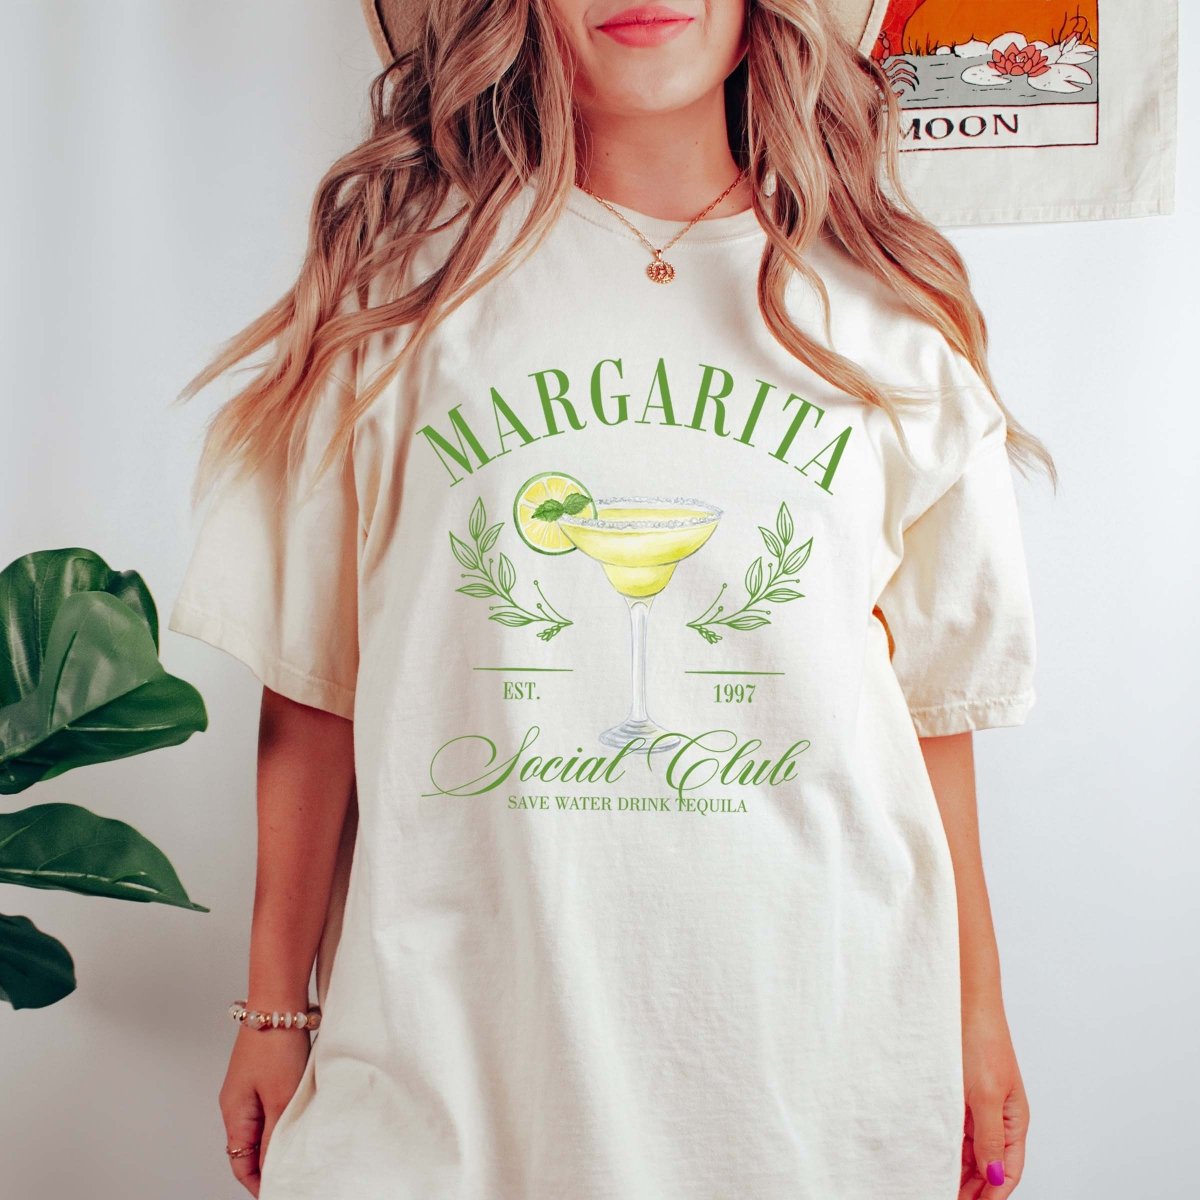 Margarita Social Club Wholesale Tee - Limeberry Designs